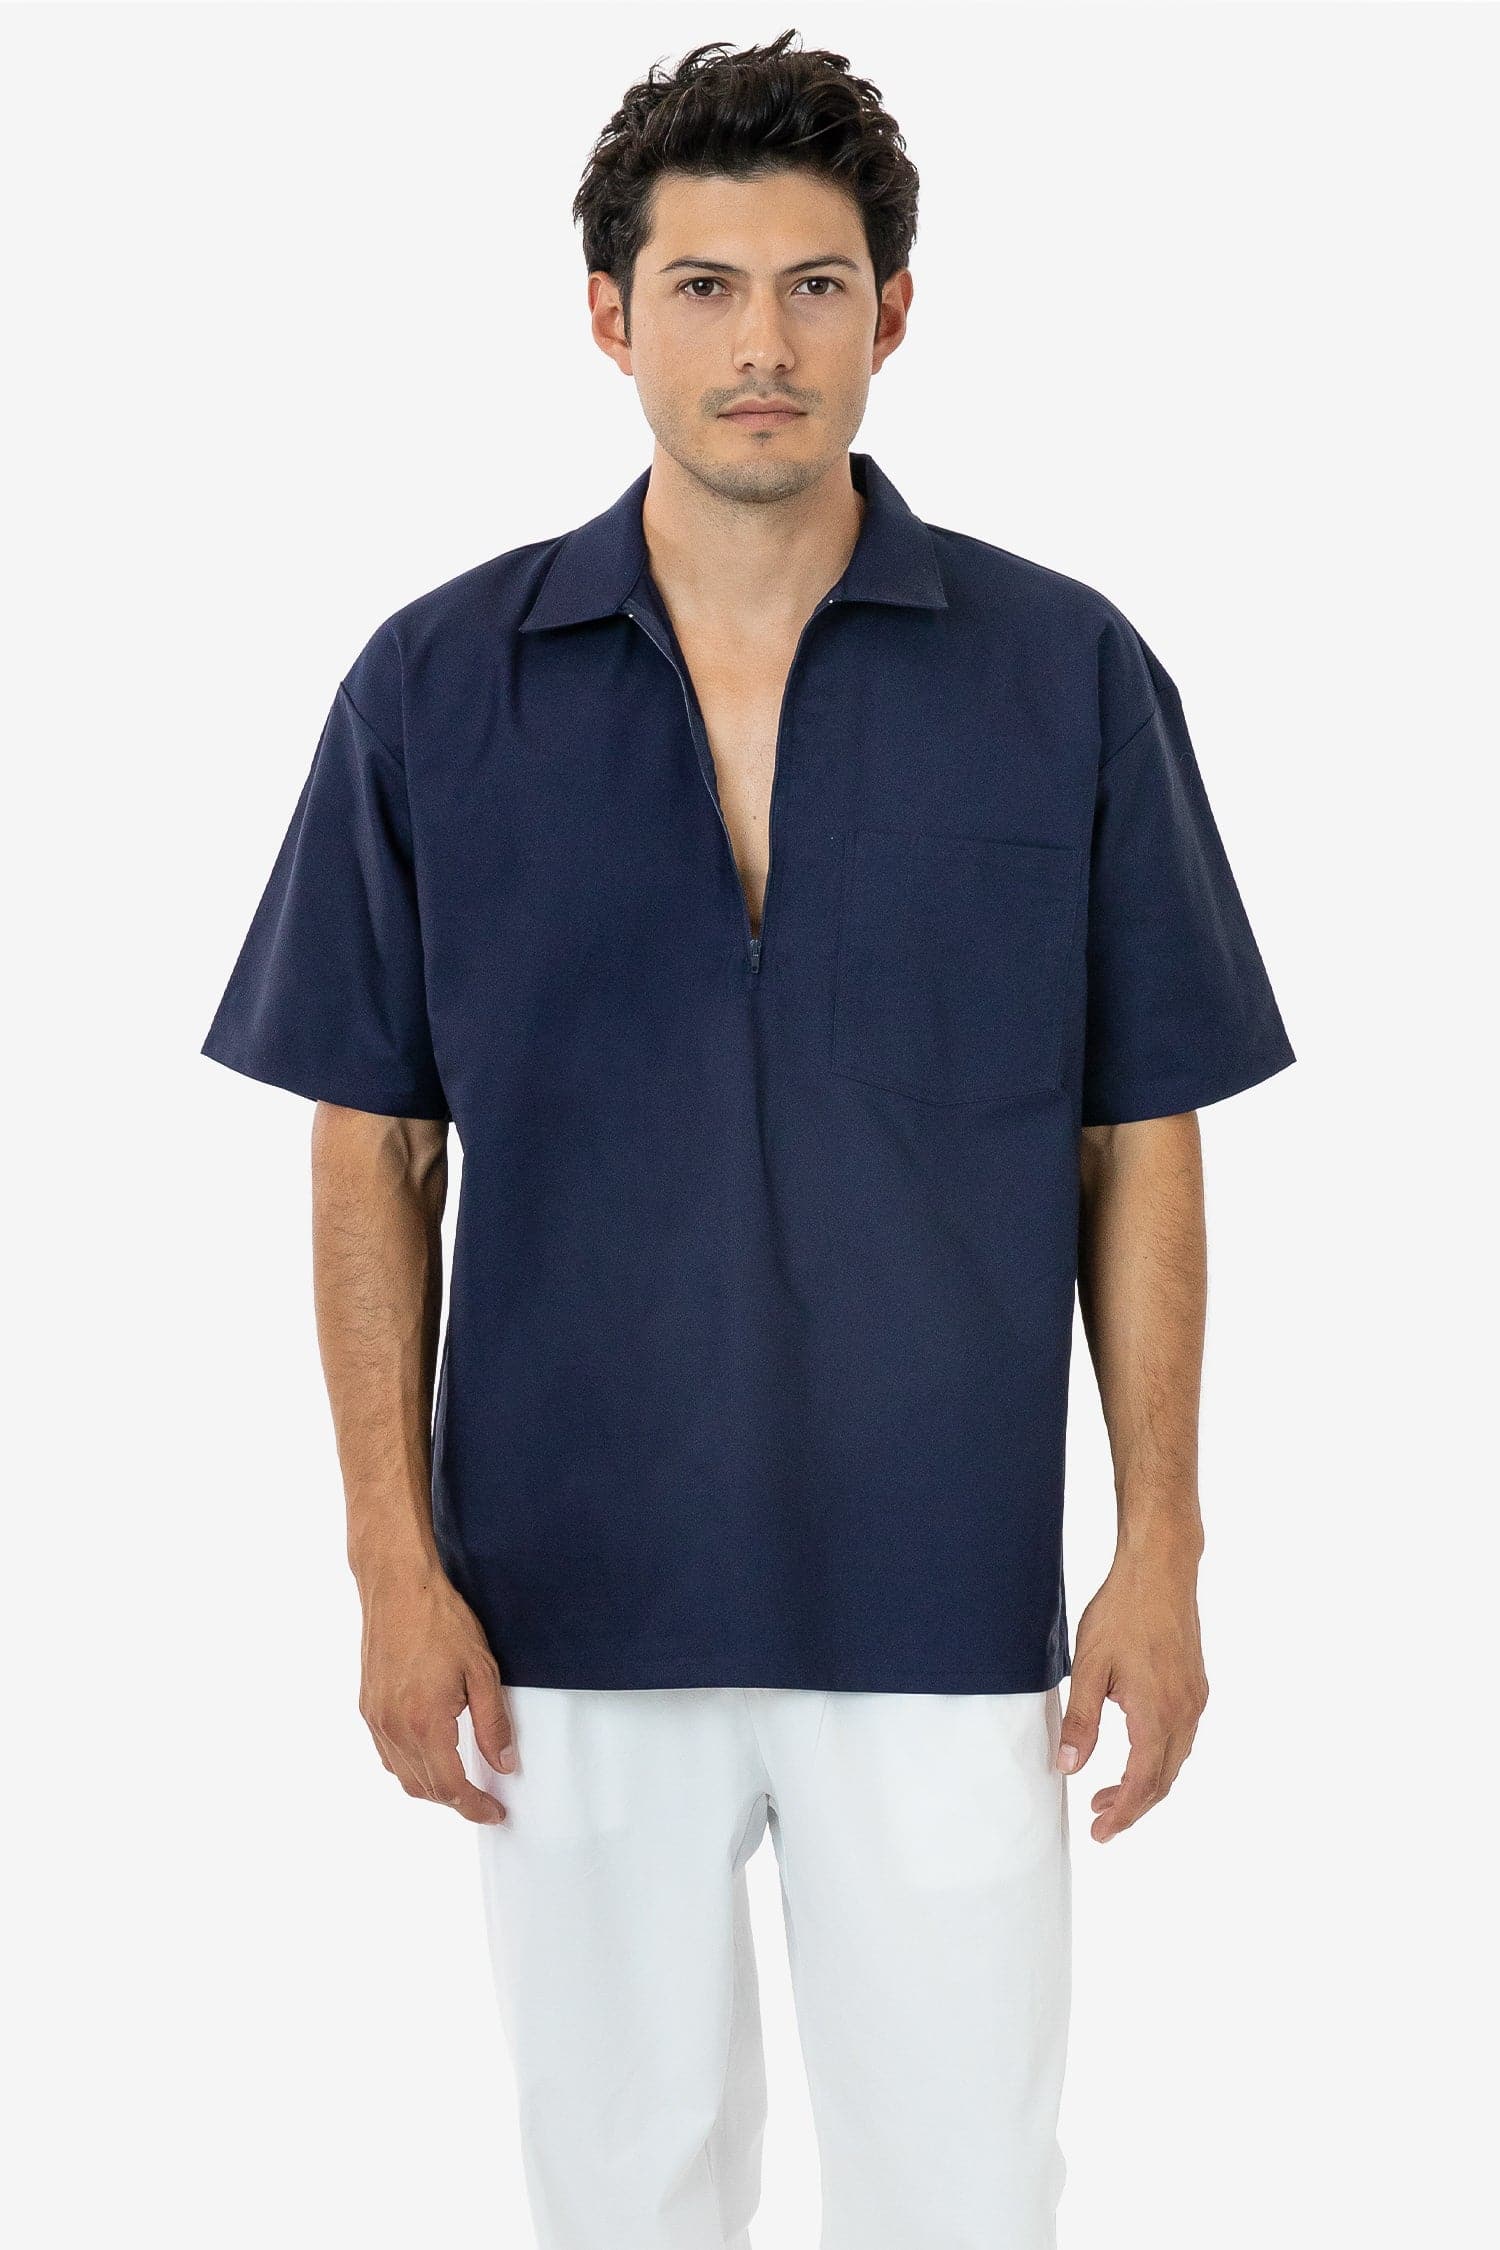 RCP409 - Oxford Zip-Up Work Shirt